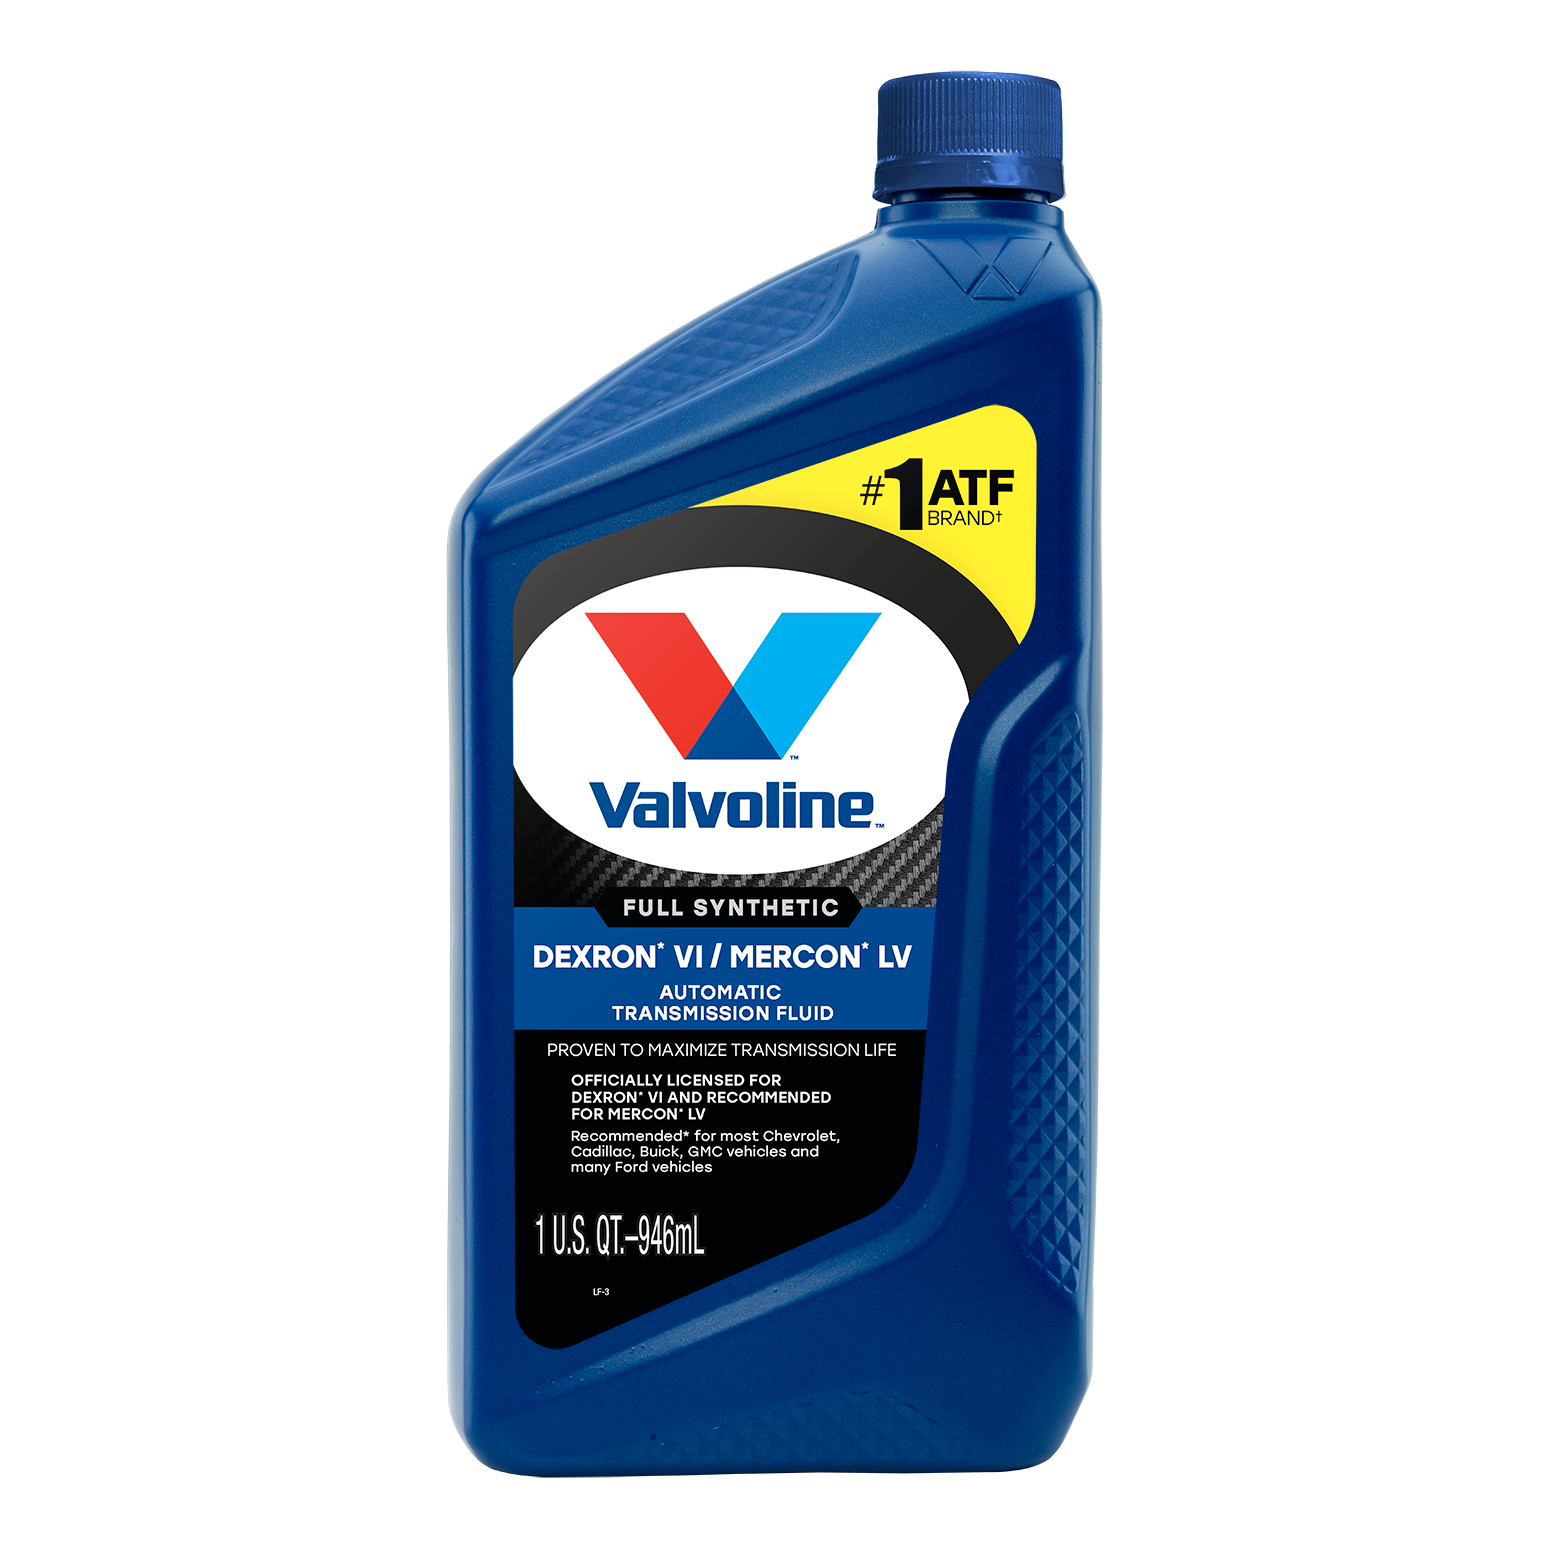  Valvoline DEXRON VI/MERCON LV (ATF) Full Synthetic